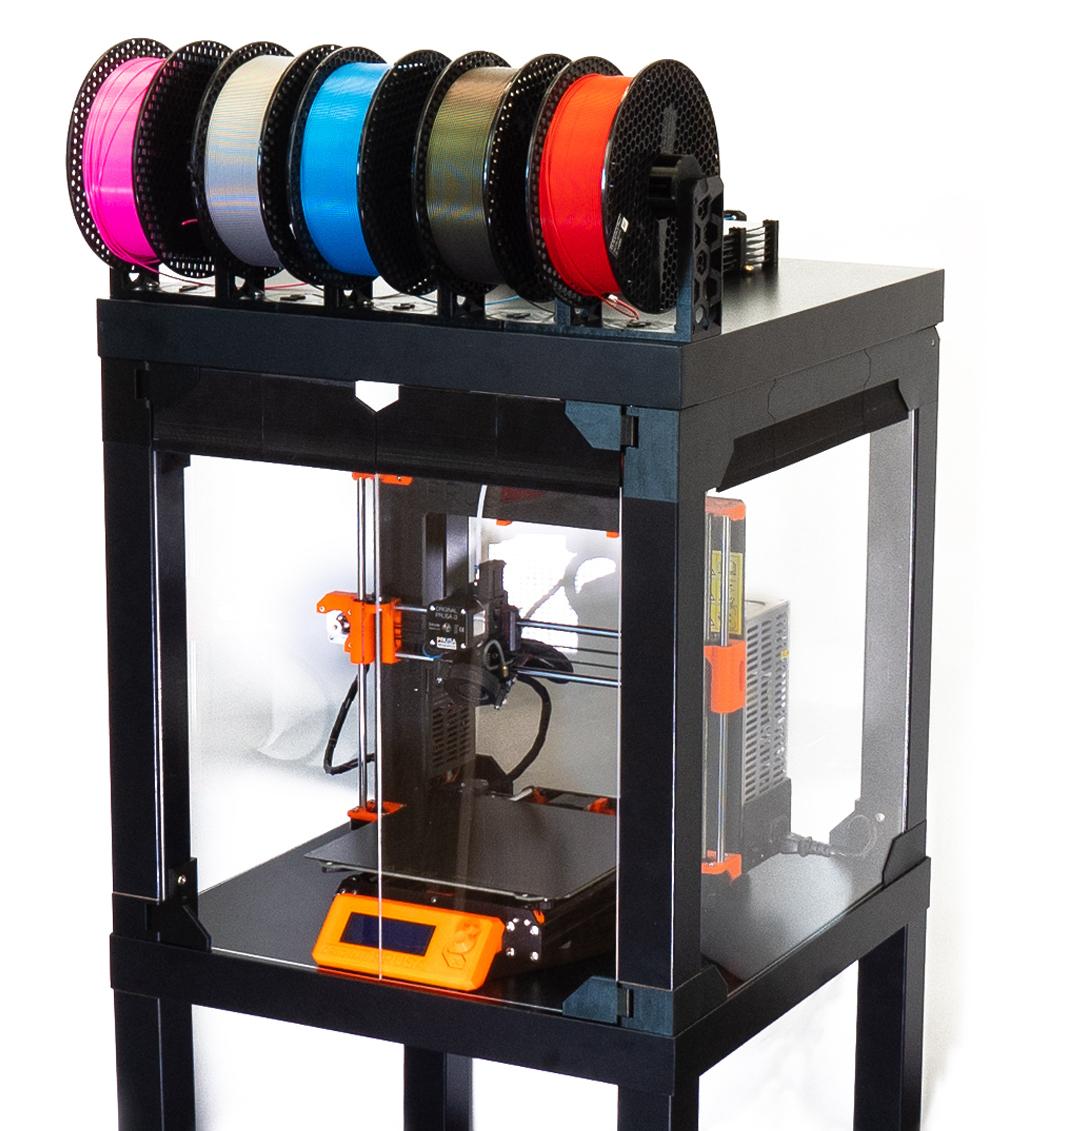 3D Printering: Why Aren’t Enclosures Easier? 